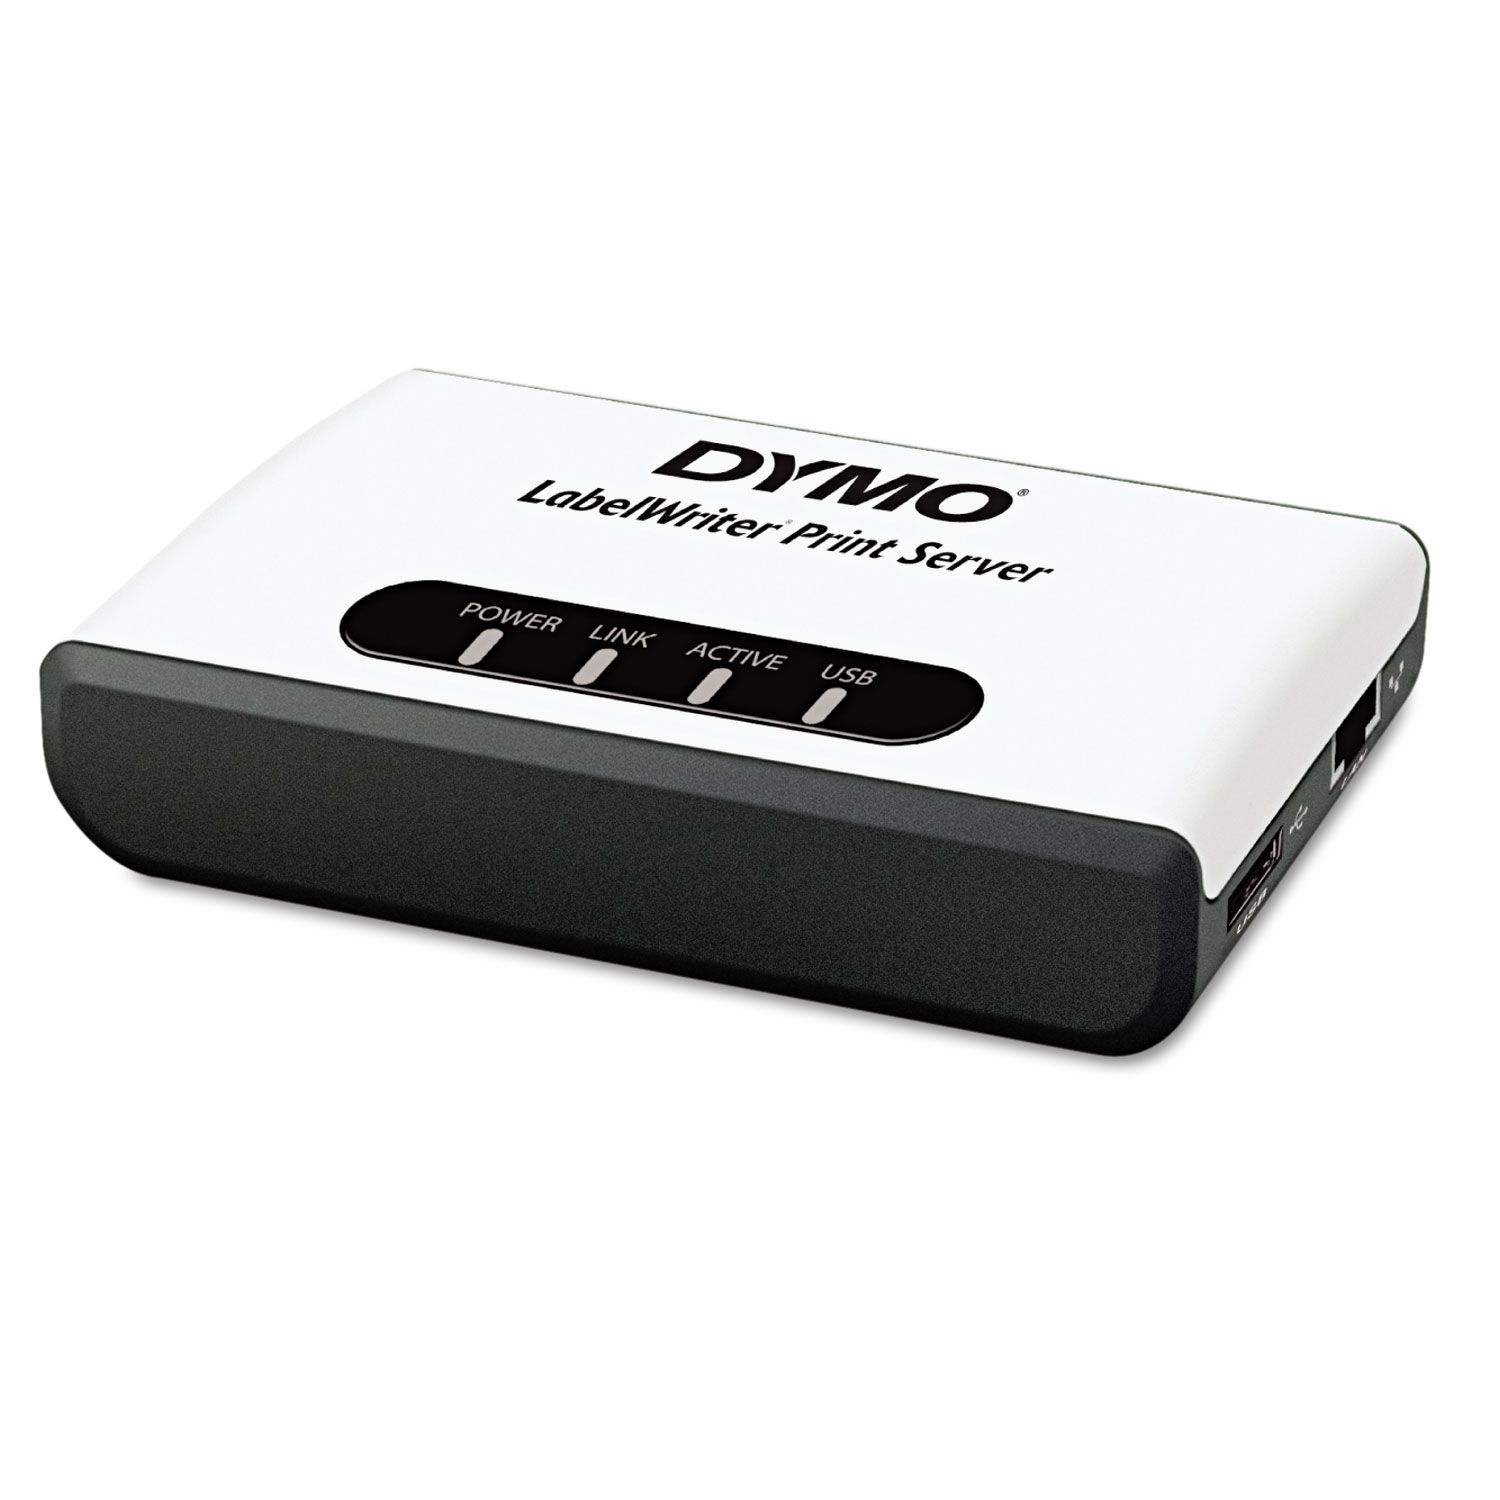  DYMO 1750630 LabelWriter Print Server for DYMO Label Makers (DYM1750630) 